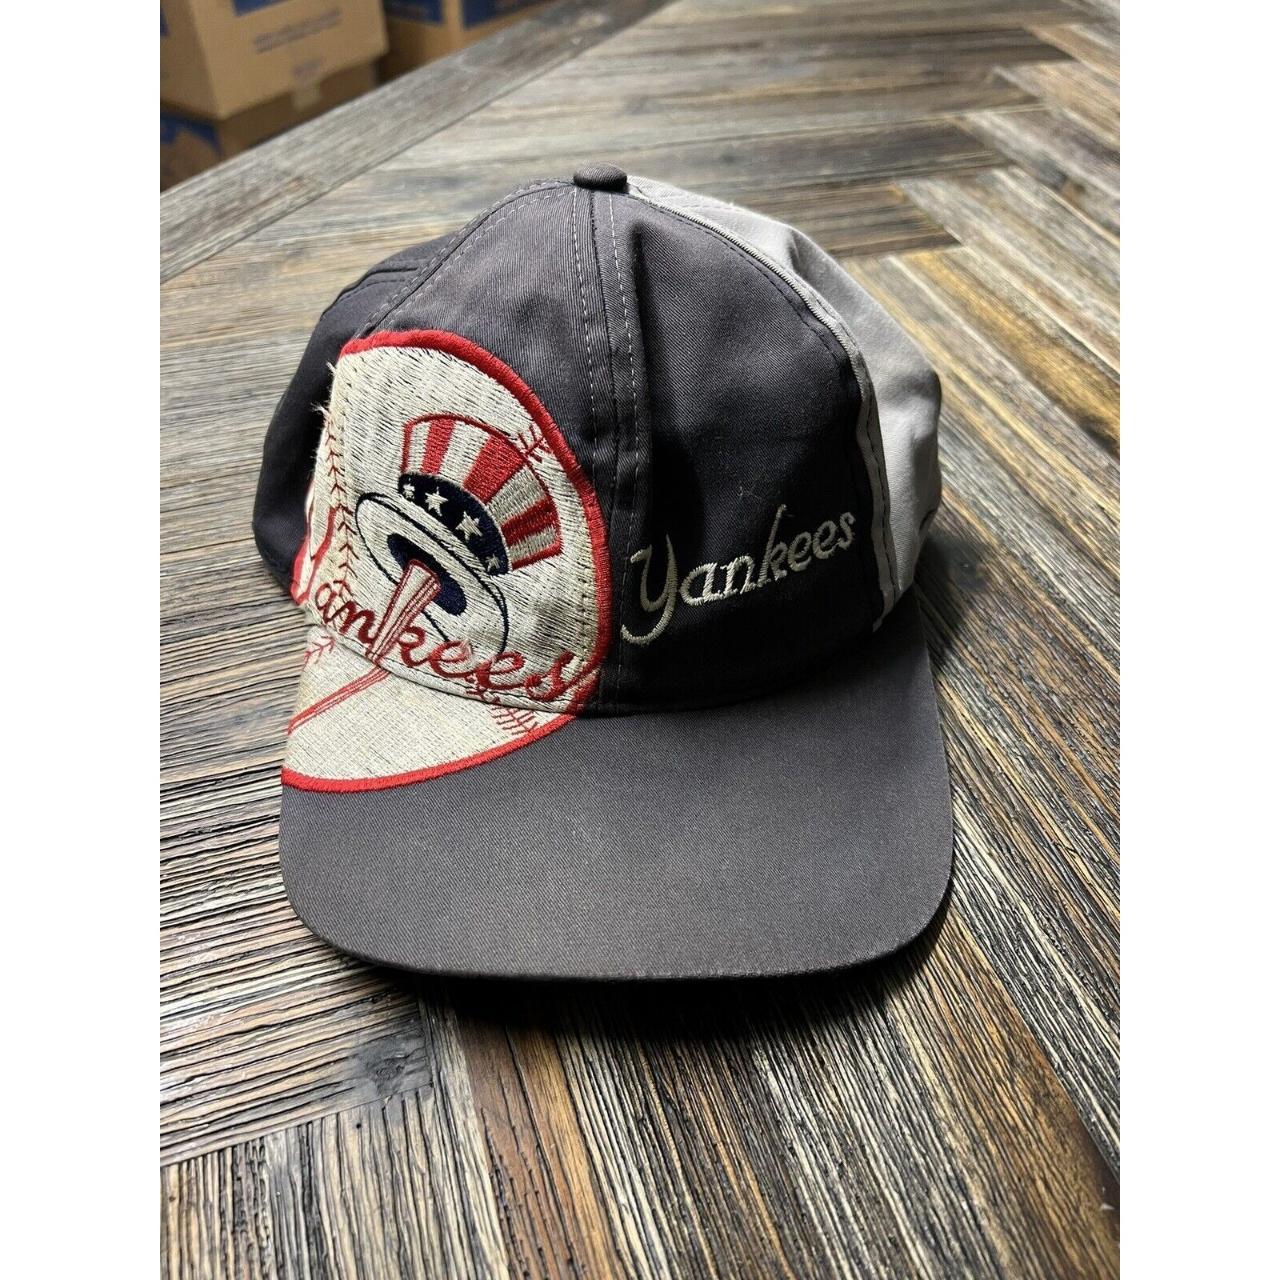 MLB Logo Hat Snapback Baseball Cap Vintage 90s New Era 125th